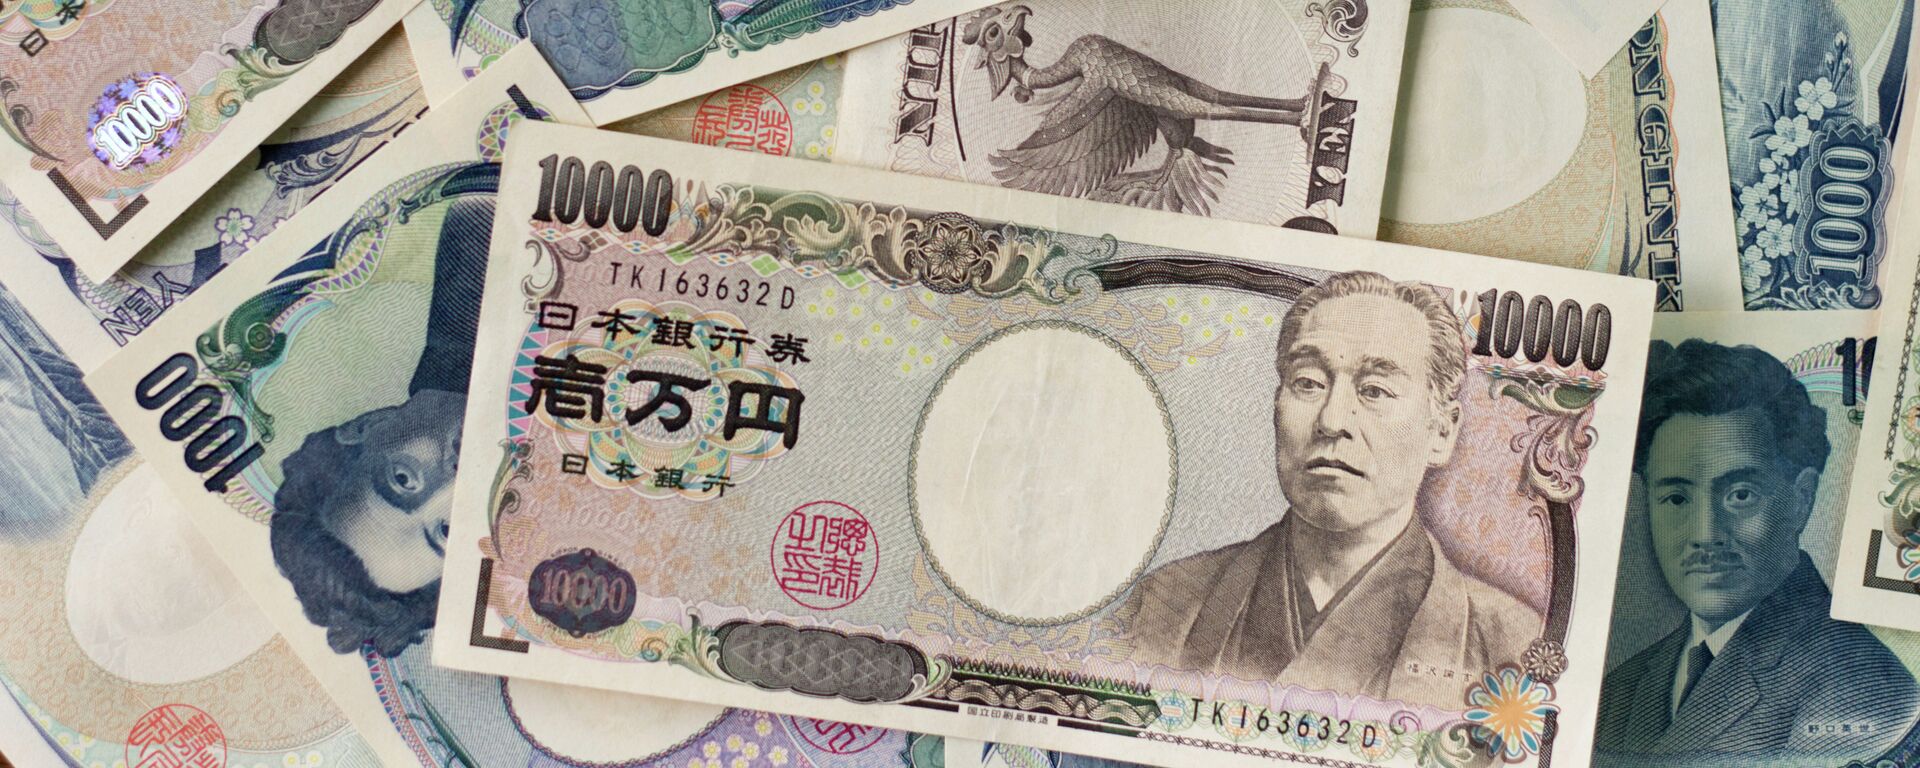 1000 yen bills and 10,000 yen bills spread out on a table. - Sputnik International, 1920, 19.10.2022